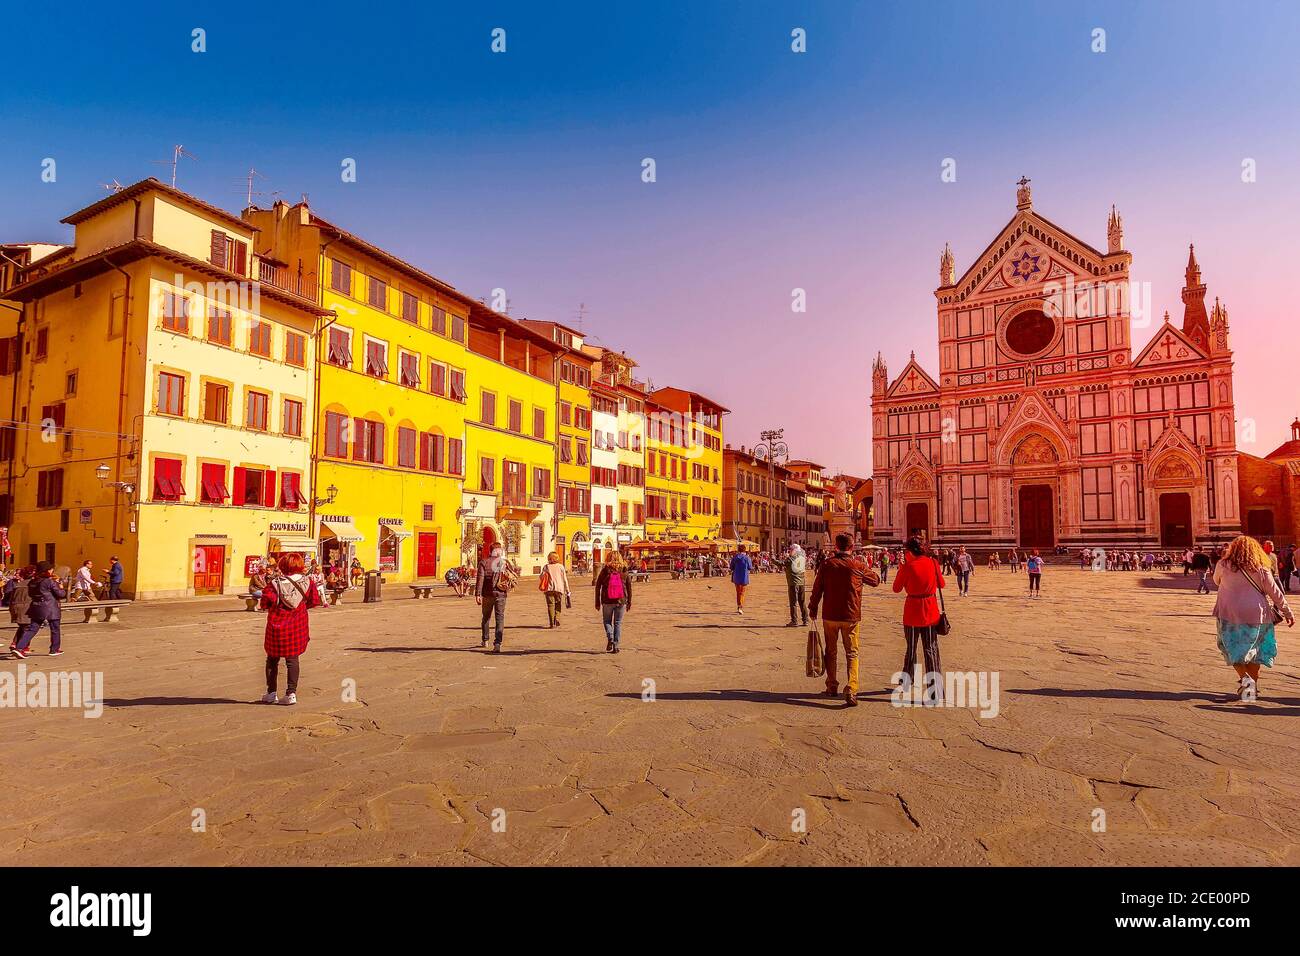 Basilica Santa Croce in Florence, Italy Stock Photo